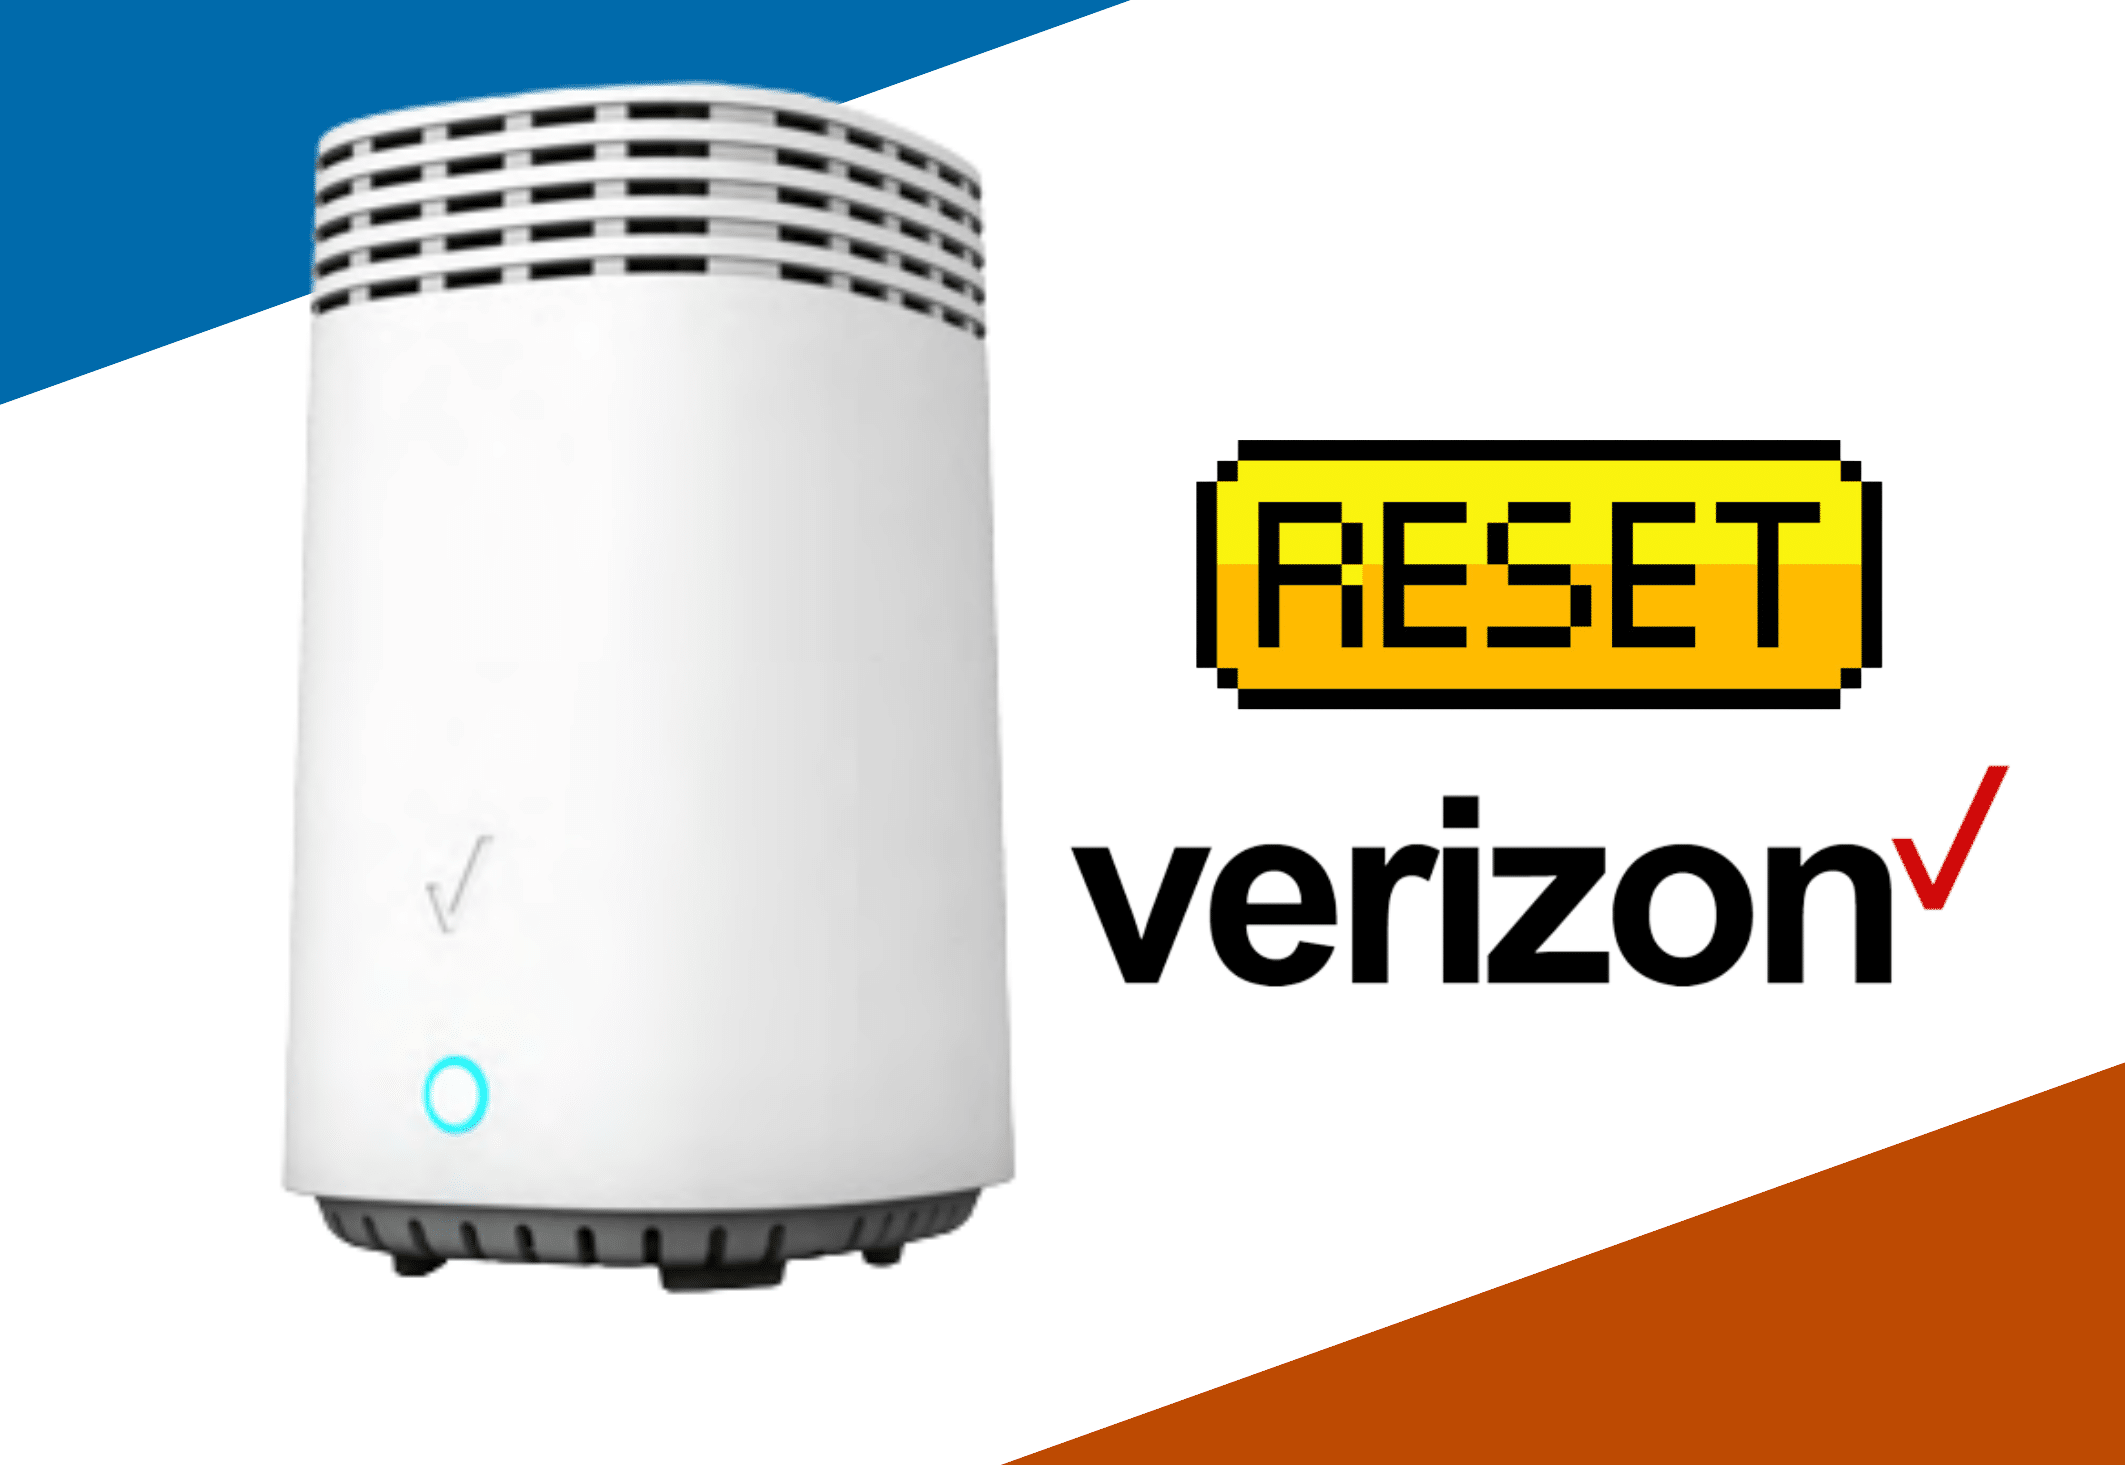 Verizon Solutions: How to Reset Verizon Router